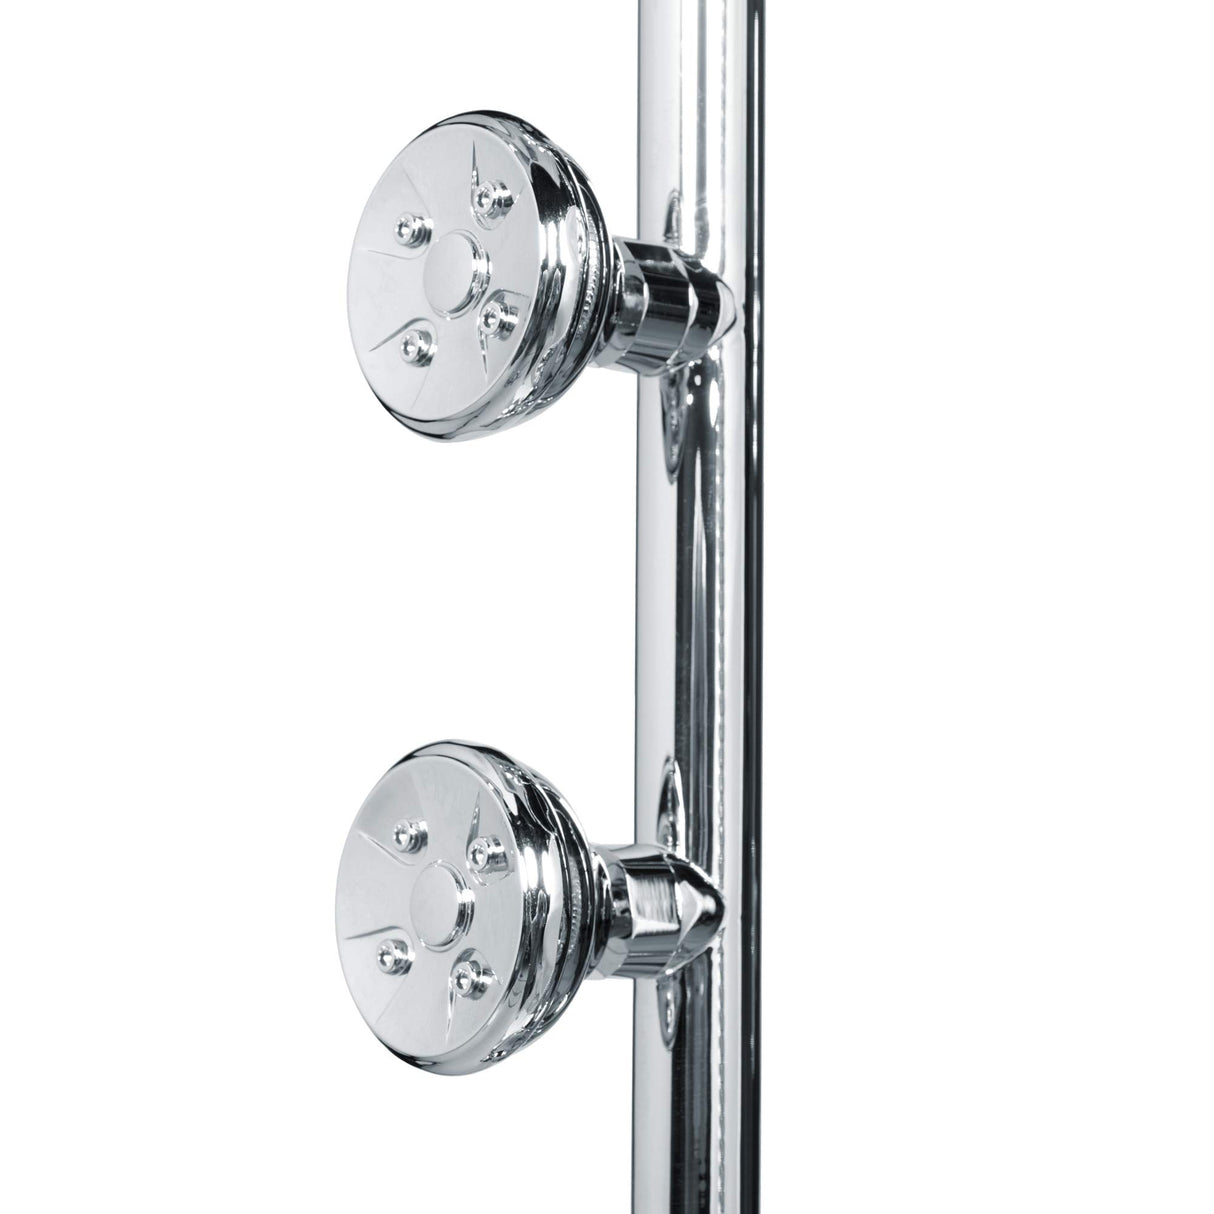 PULSE ShowerSpas 1089-CH Lanai Shower System, 8" Rain Showerhead, 5-Function Hand Shower, 3 Body Spray Jets, Adjustable Slide Bar, Polished Chrome